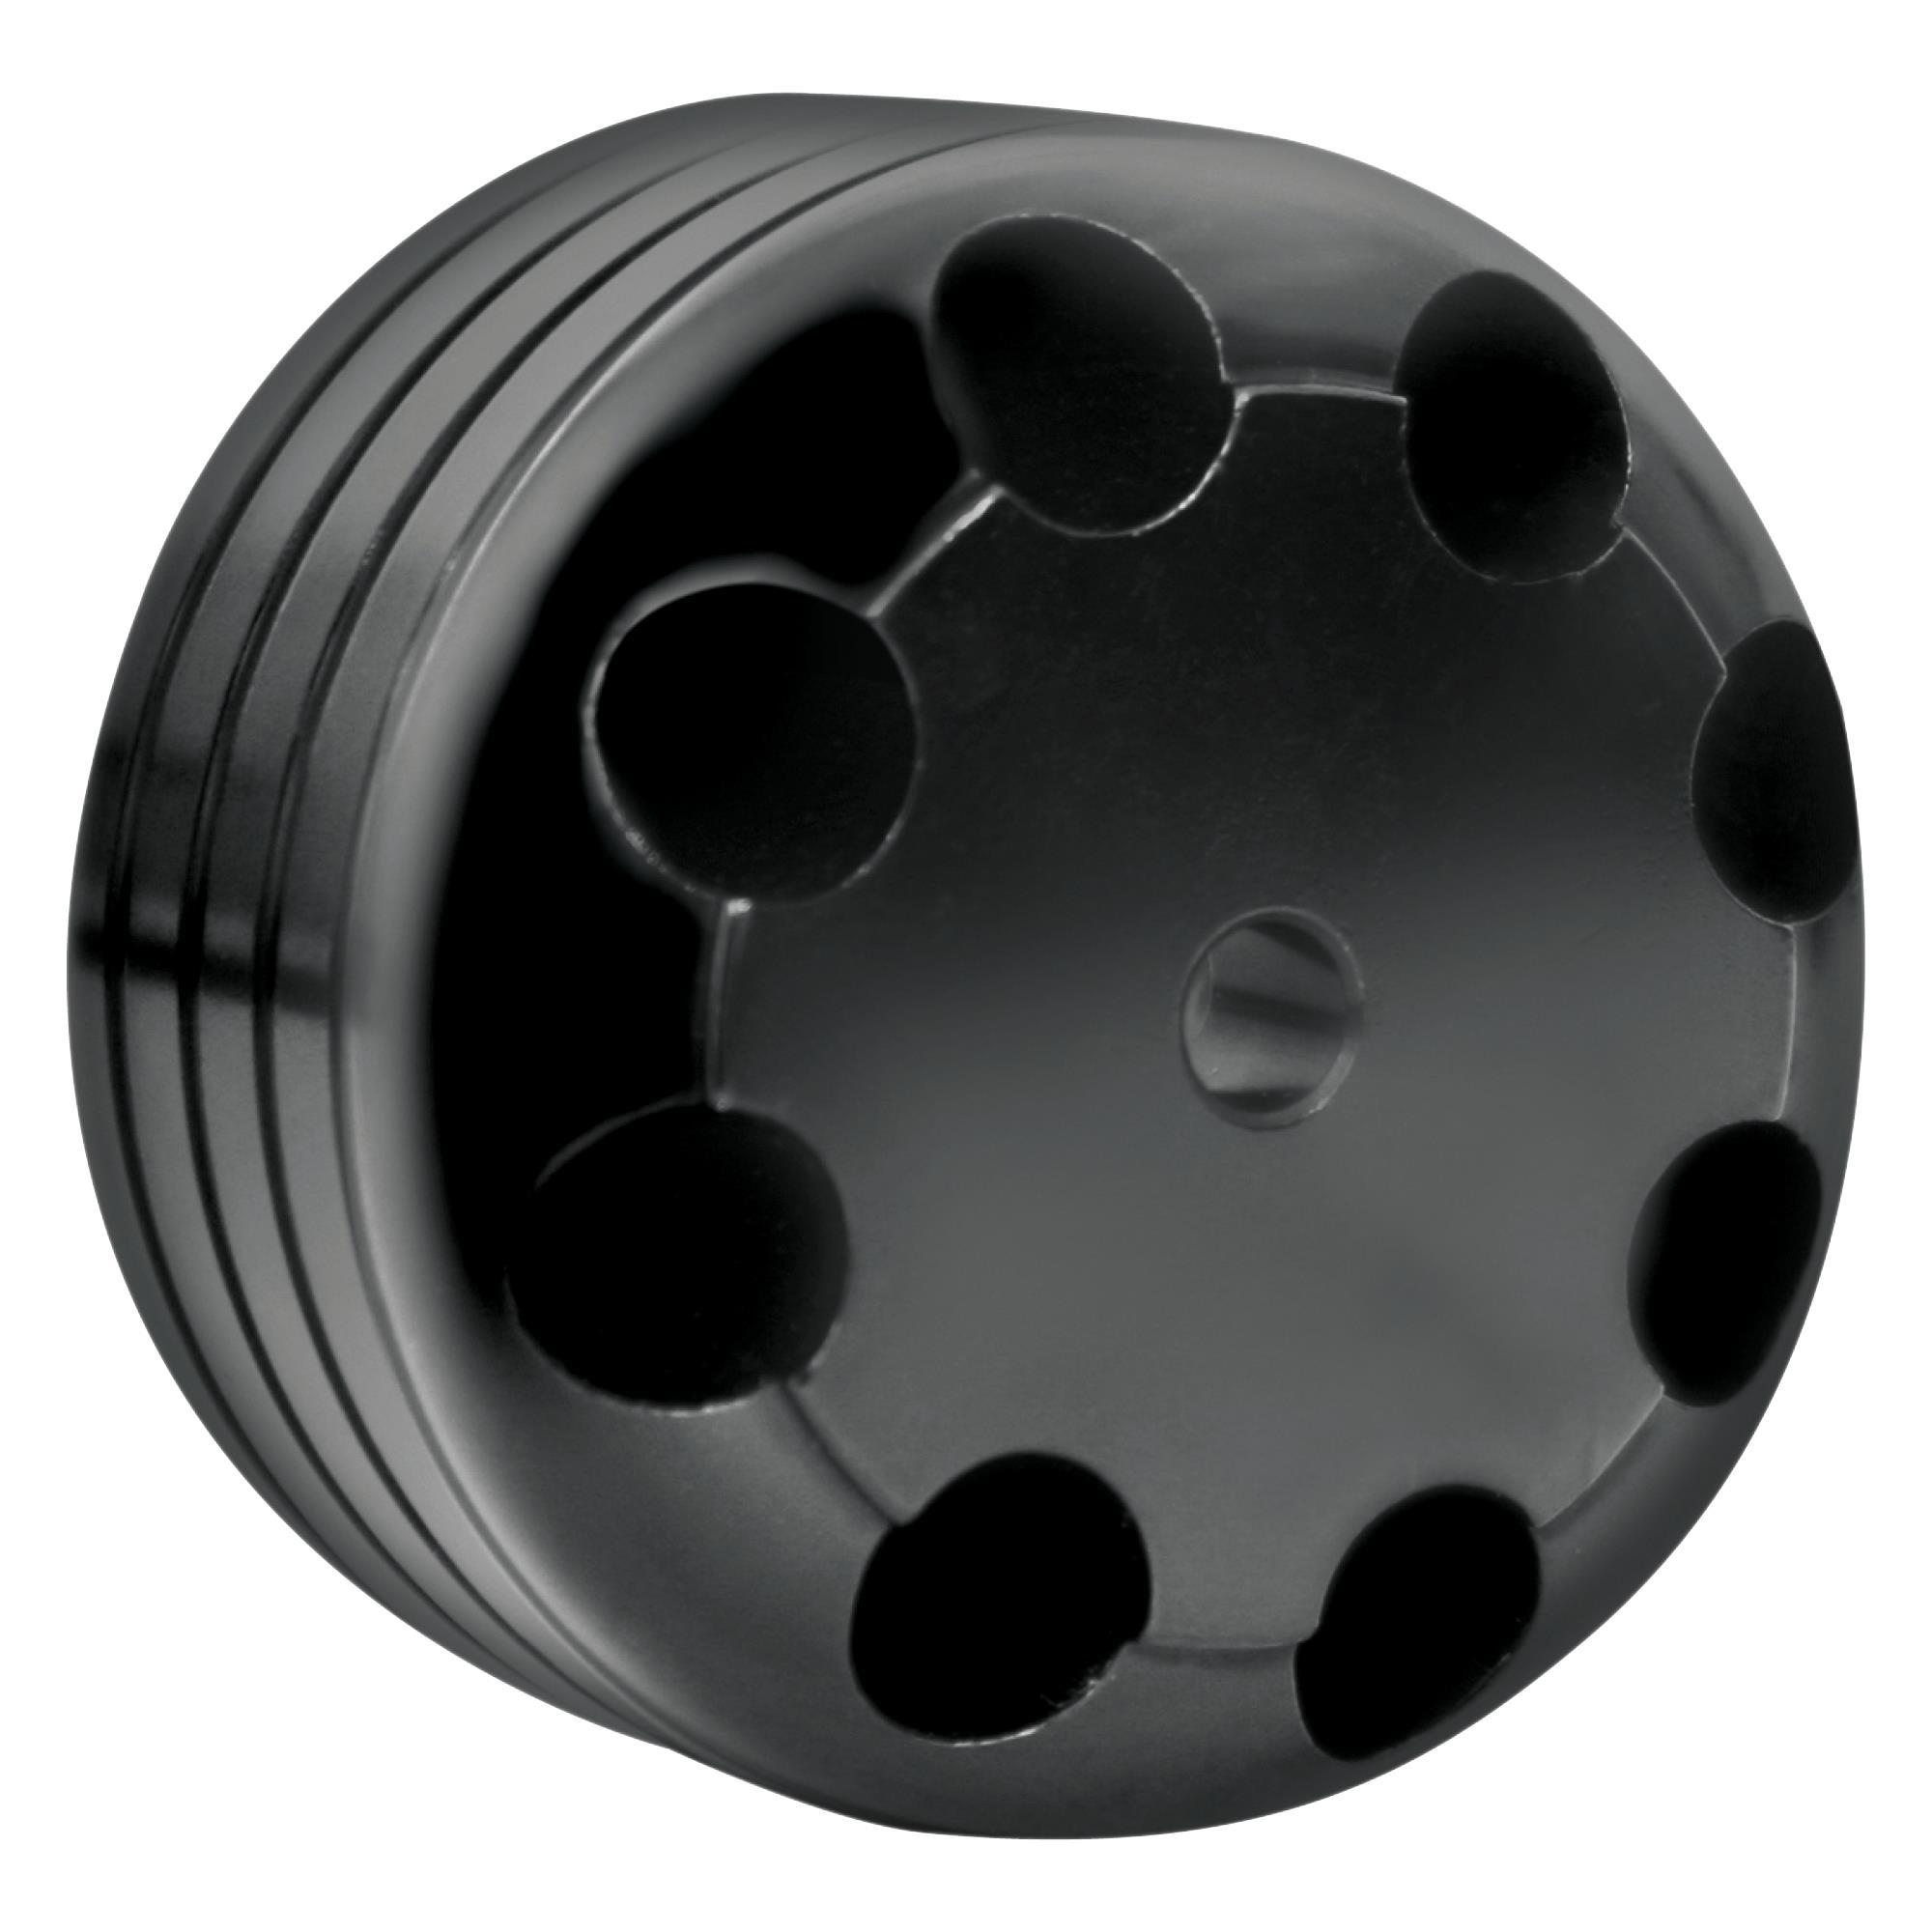 Caster / Camber Gauge Adapter - 5/16-18 in Gauge Bolt to Universal Spindle - Magnetic - 3 in Diameter - Aluminum - Black Powder Coat - Each